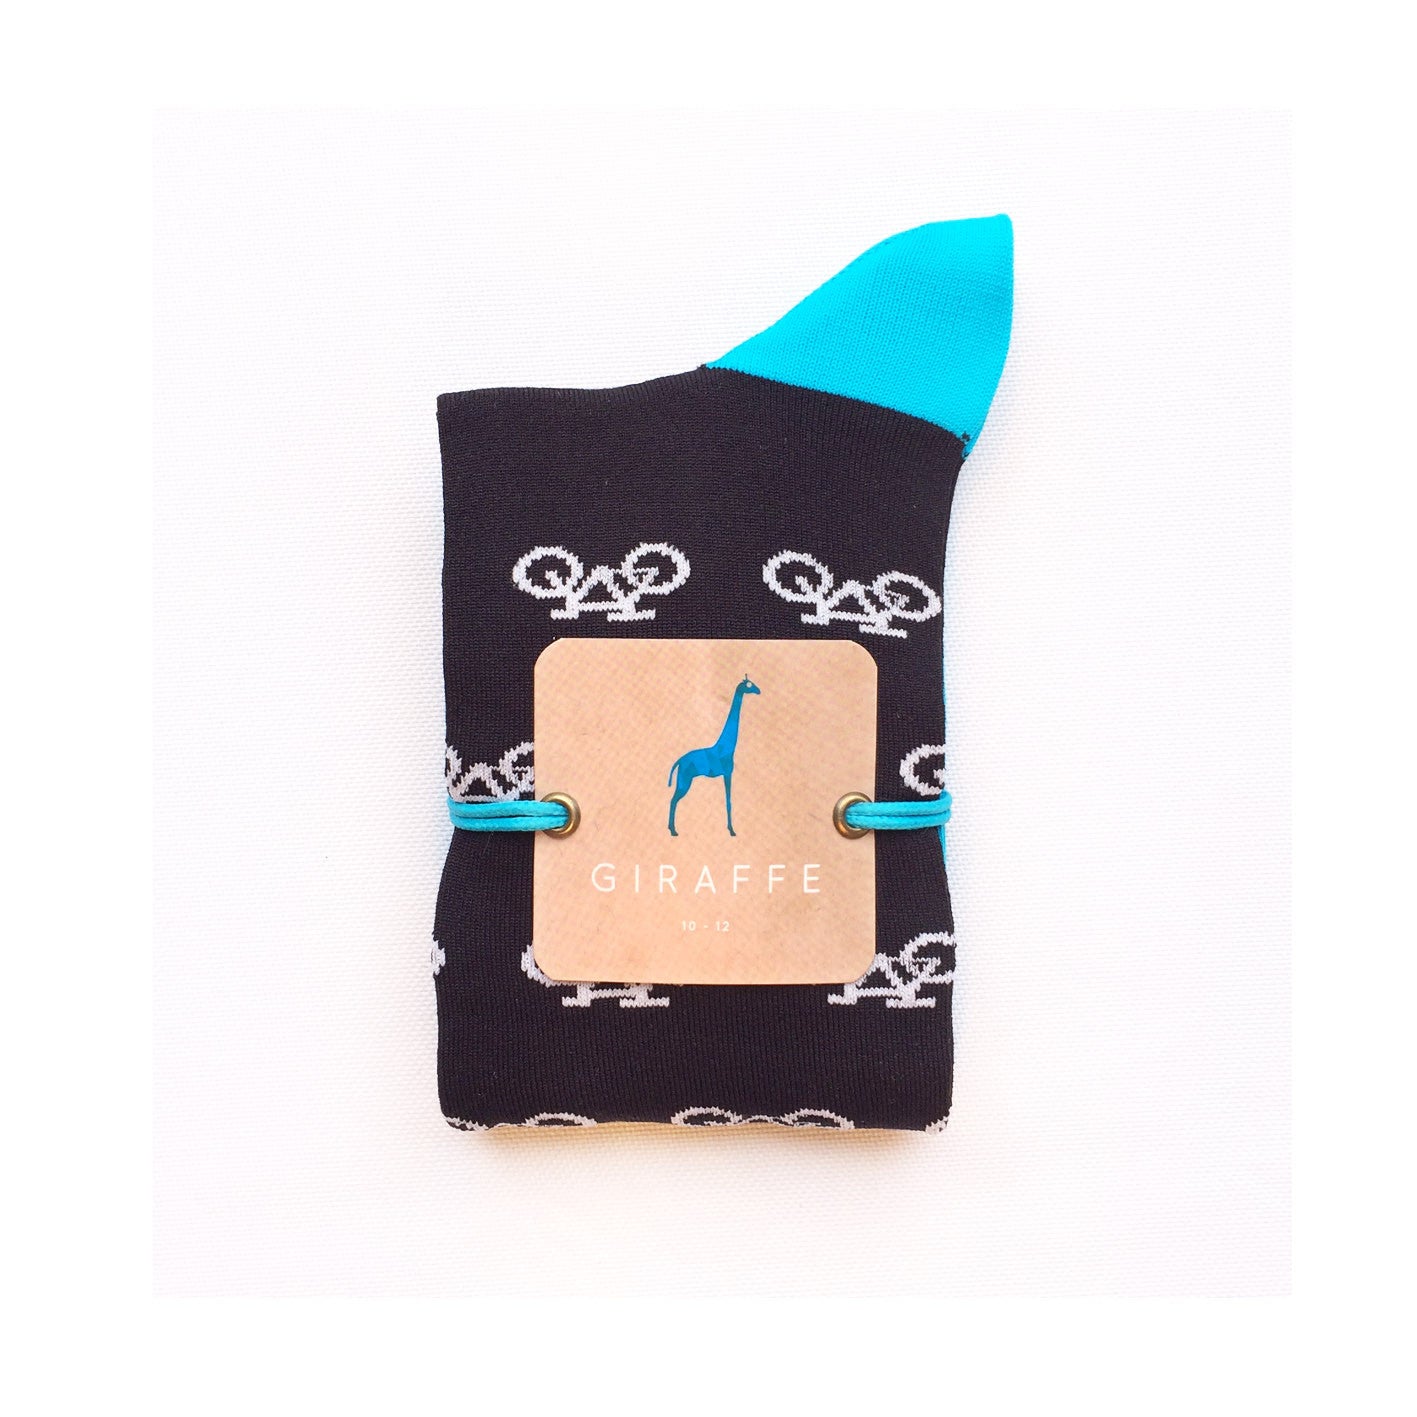 Giraffecool-Giraffe-Cool-Brand-Black-Blue-And-White-Bicycle-Bike-Microfiber-Fashion-Socks-Closed